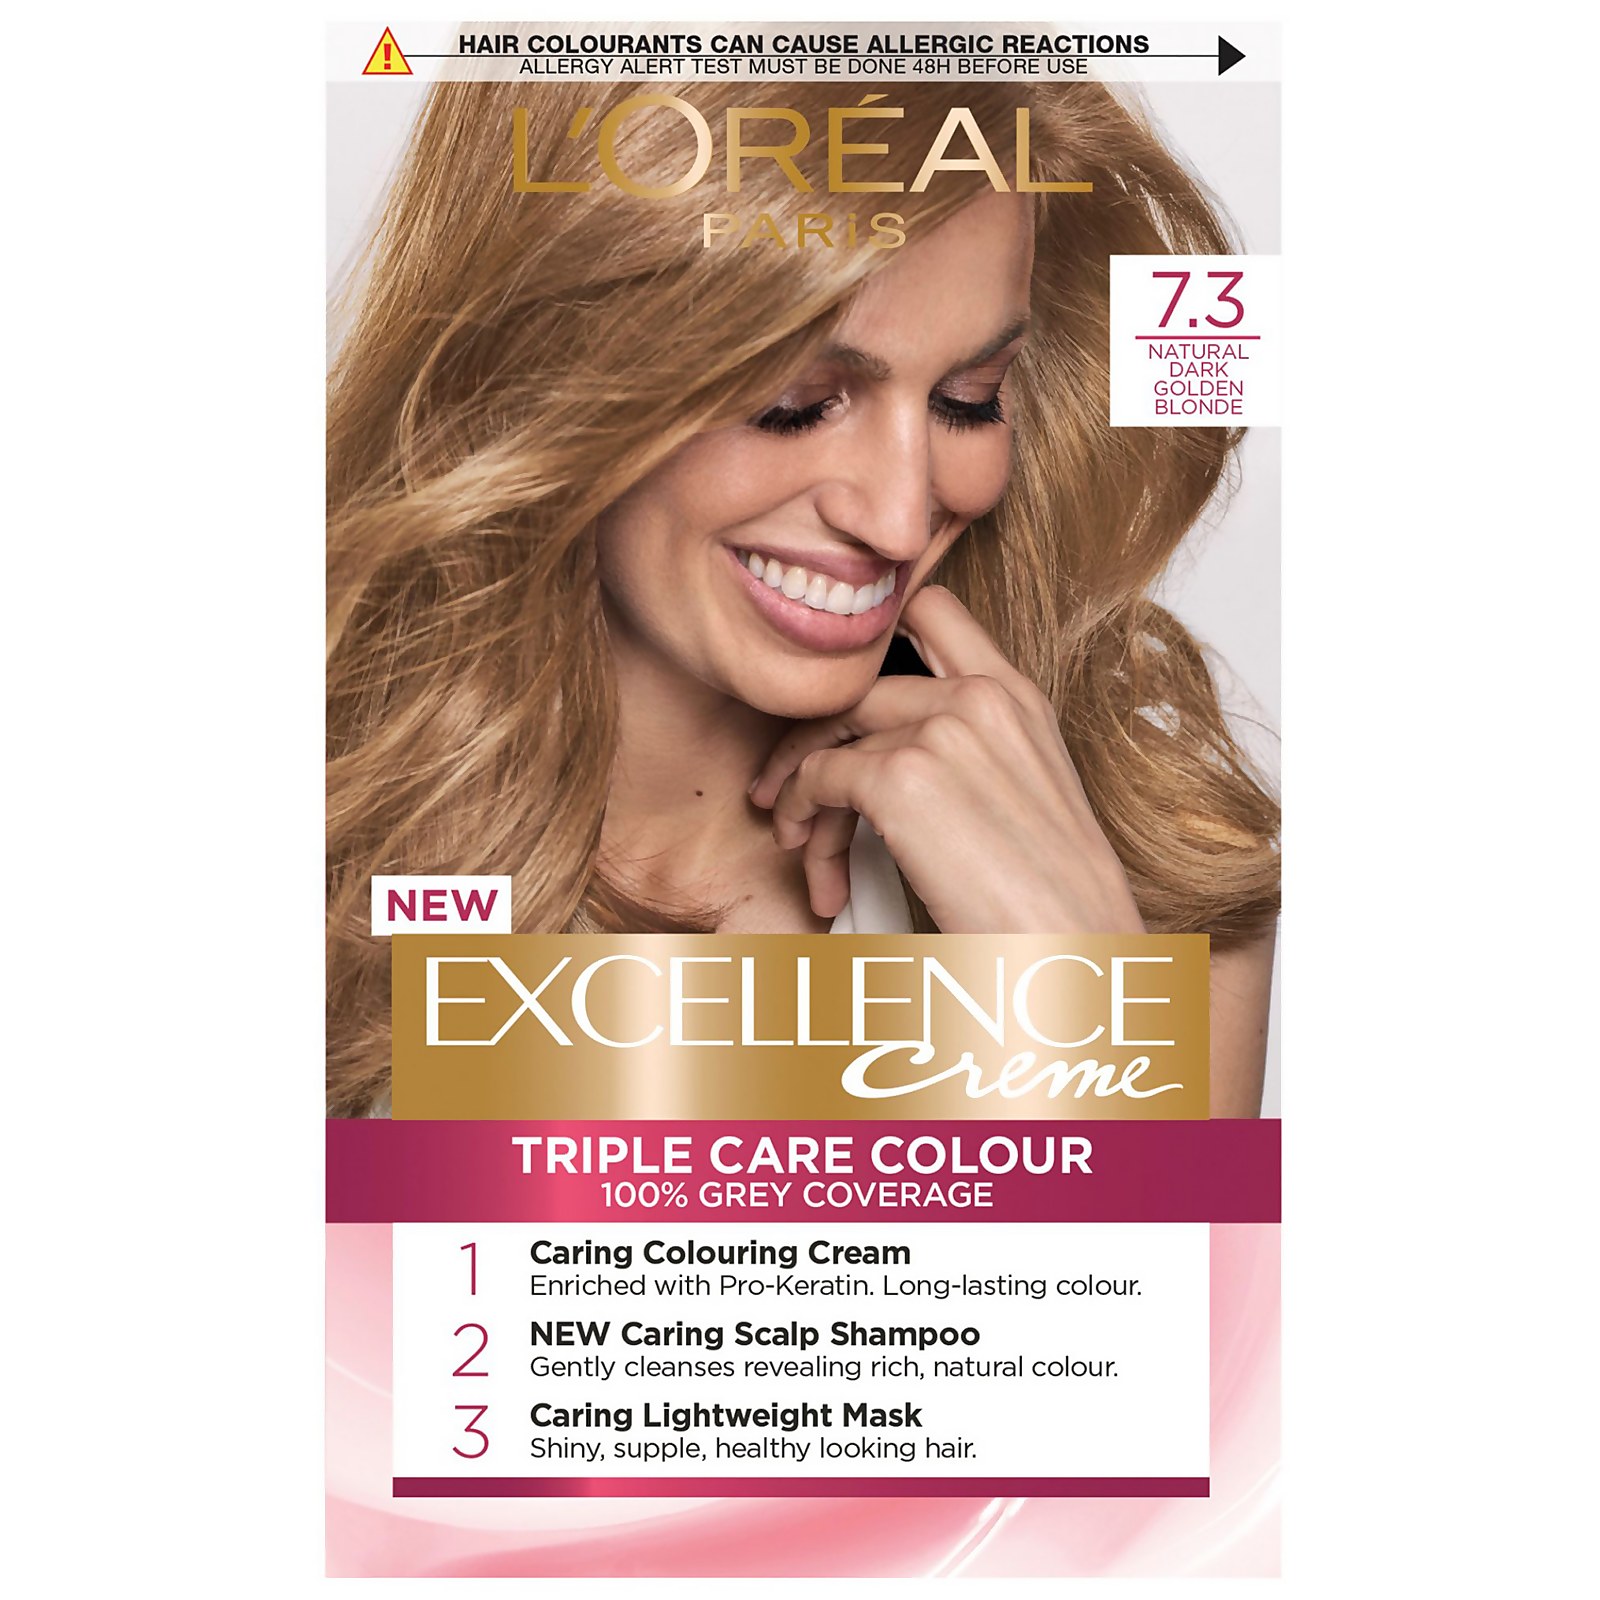 L'Oreal Paris Excellence Creme Permanent Hair Dye (Various Shades) - 7.3 Natural Dark Golden Blonde